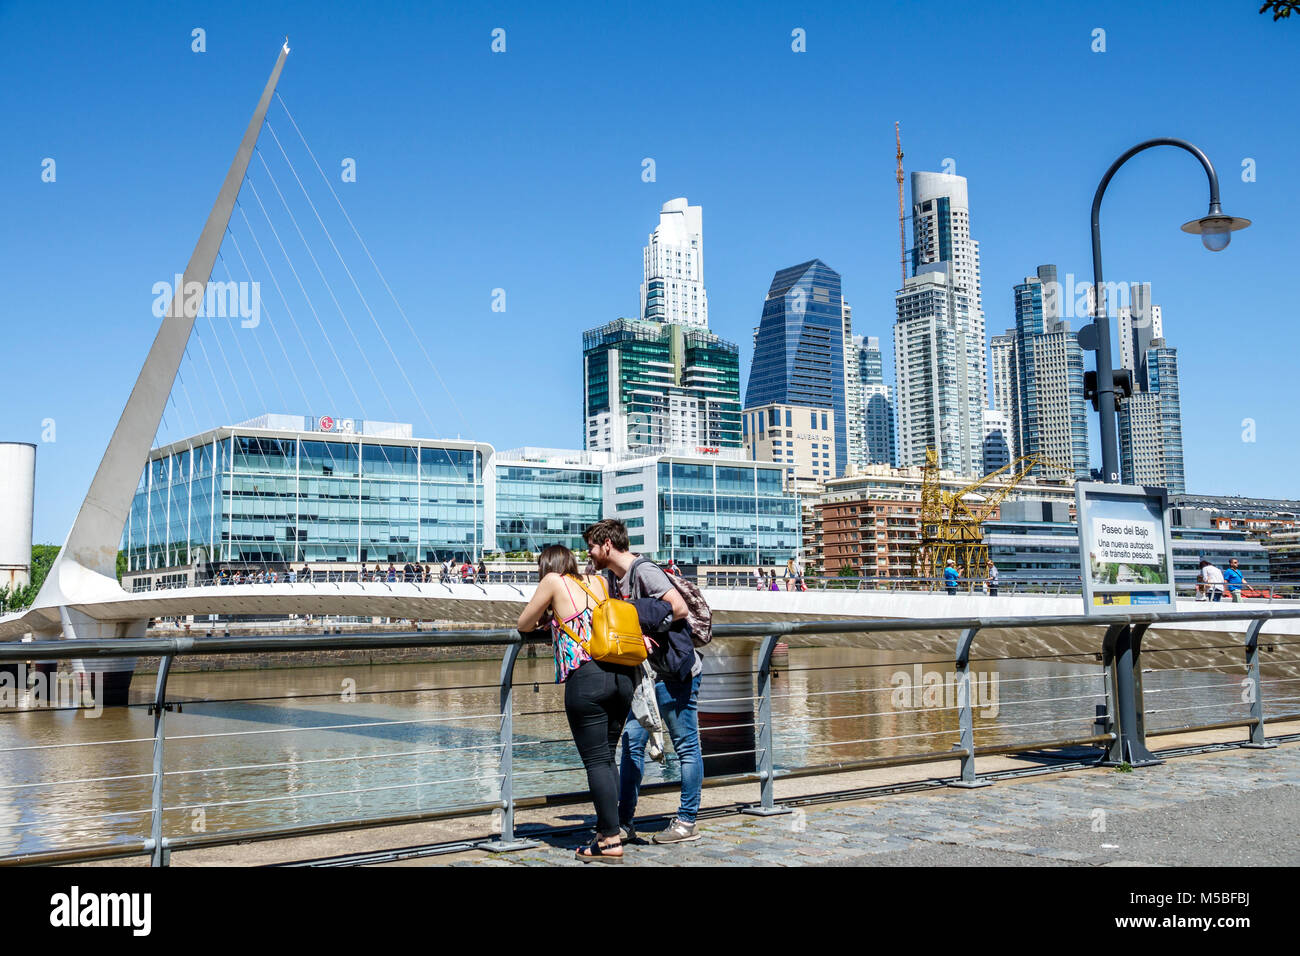 Buenos Aires Argentinien, Puerto Madero, Rio Dique, Wasser, Skyline der Stadt am Fluss, Promenade Puente de La Mujer, Fußgängerbrücke entworfen Stockfoto